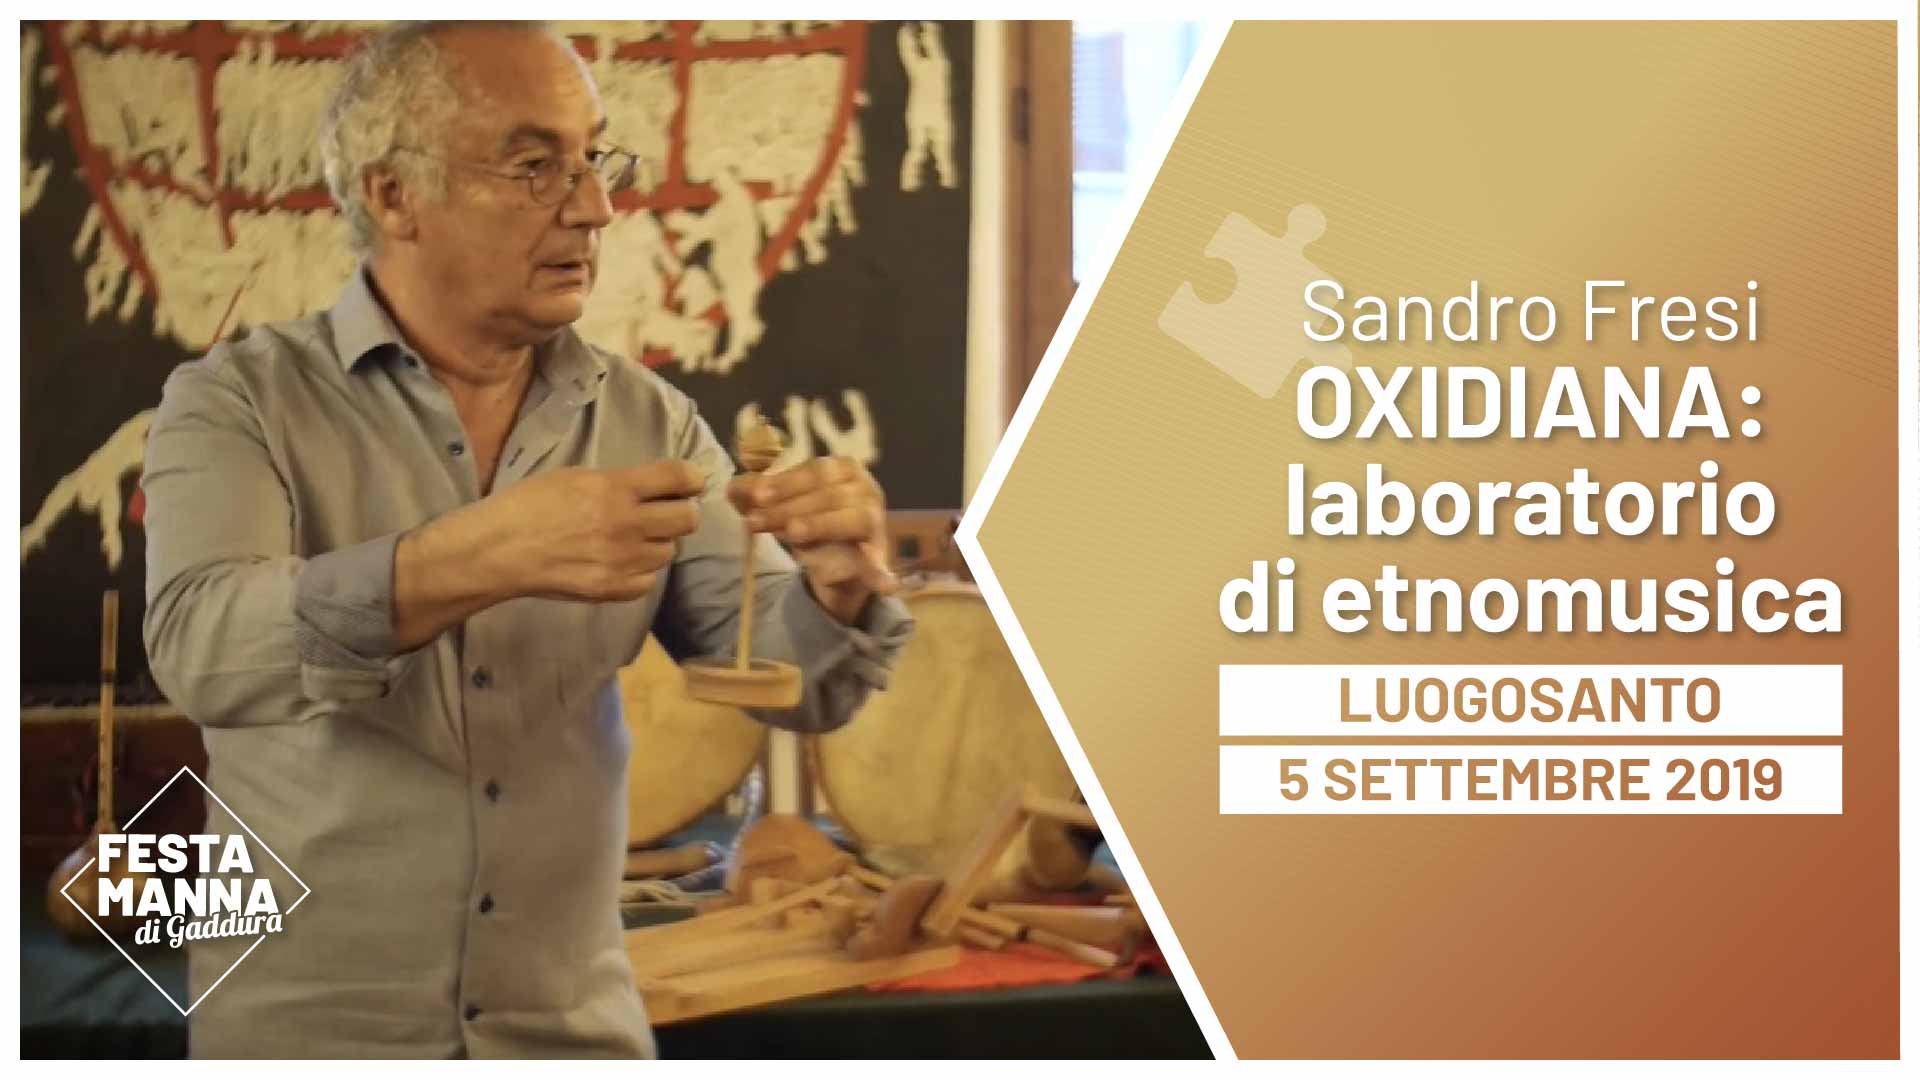 Oxidiana, ethnomusic workshop with Sandro Fresi | Festa Manna di Gaddura 2019